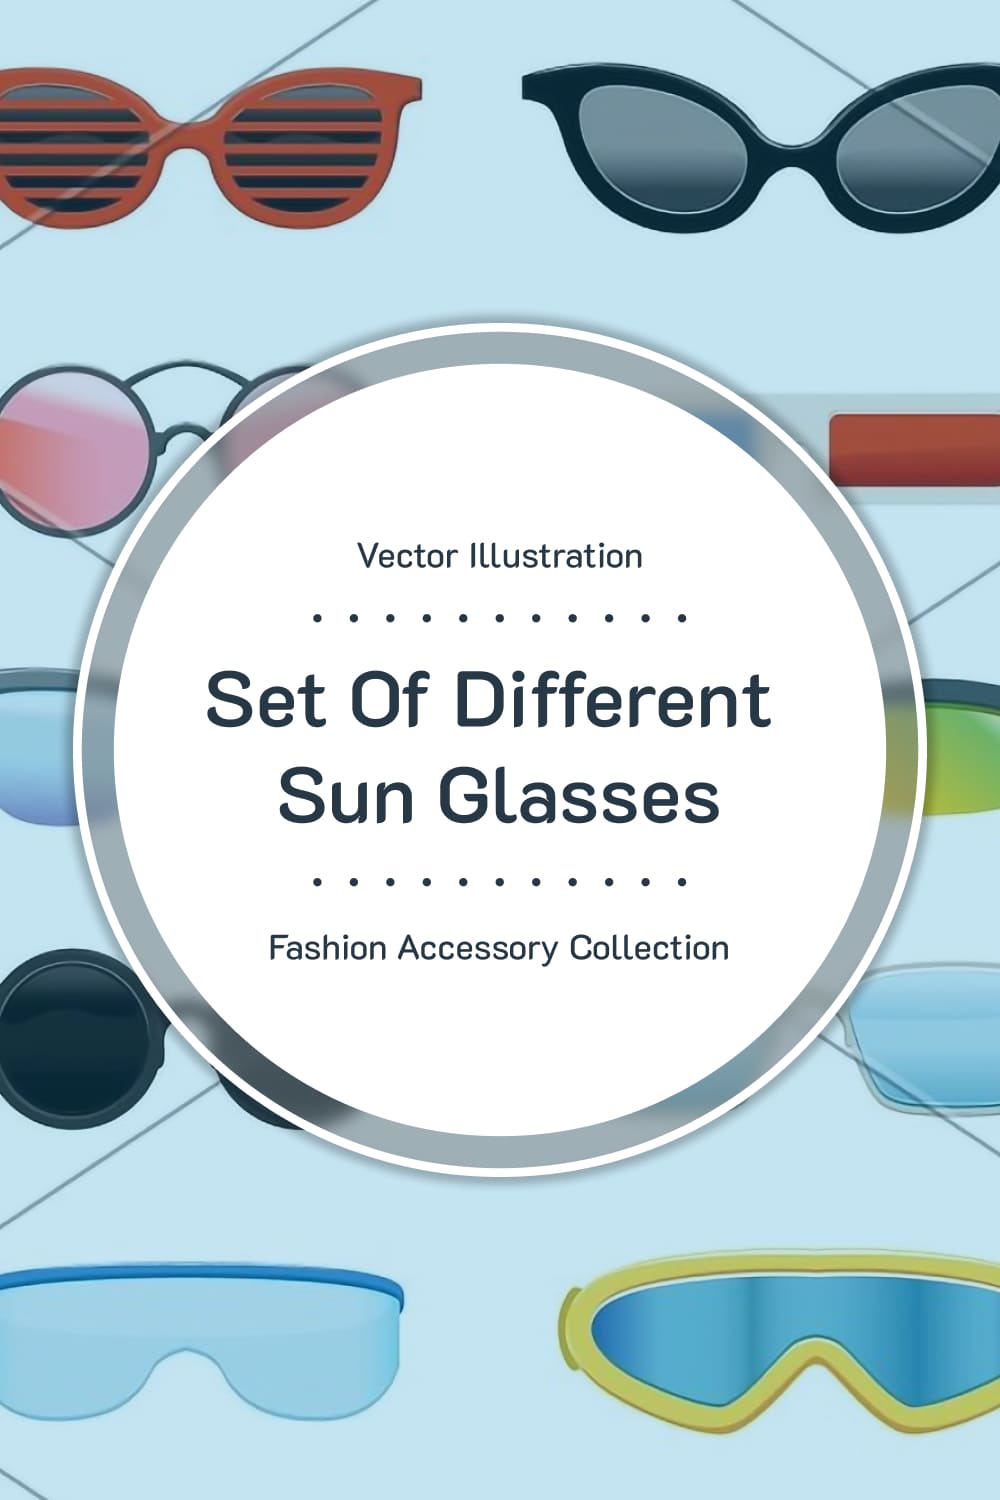 Set of different sun glasses pinterest image.